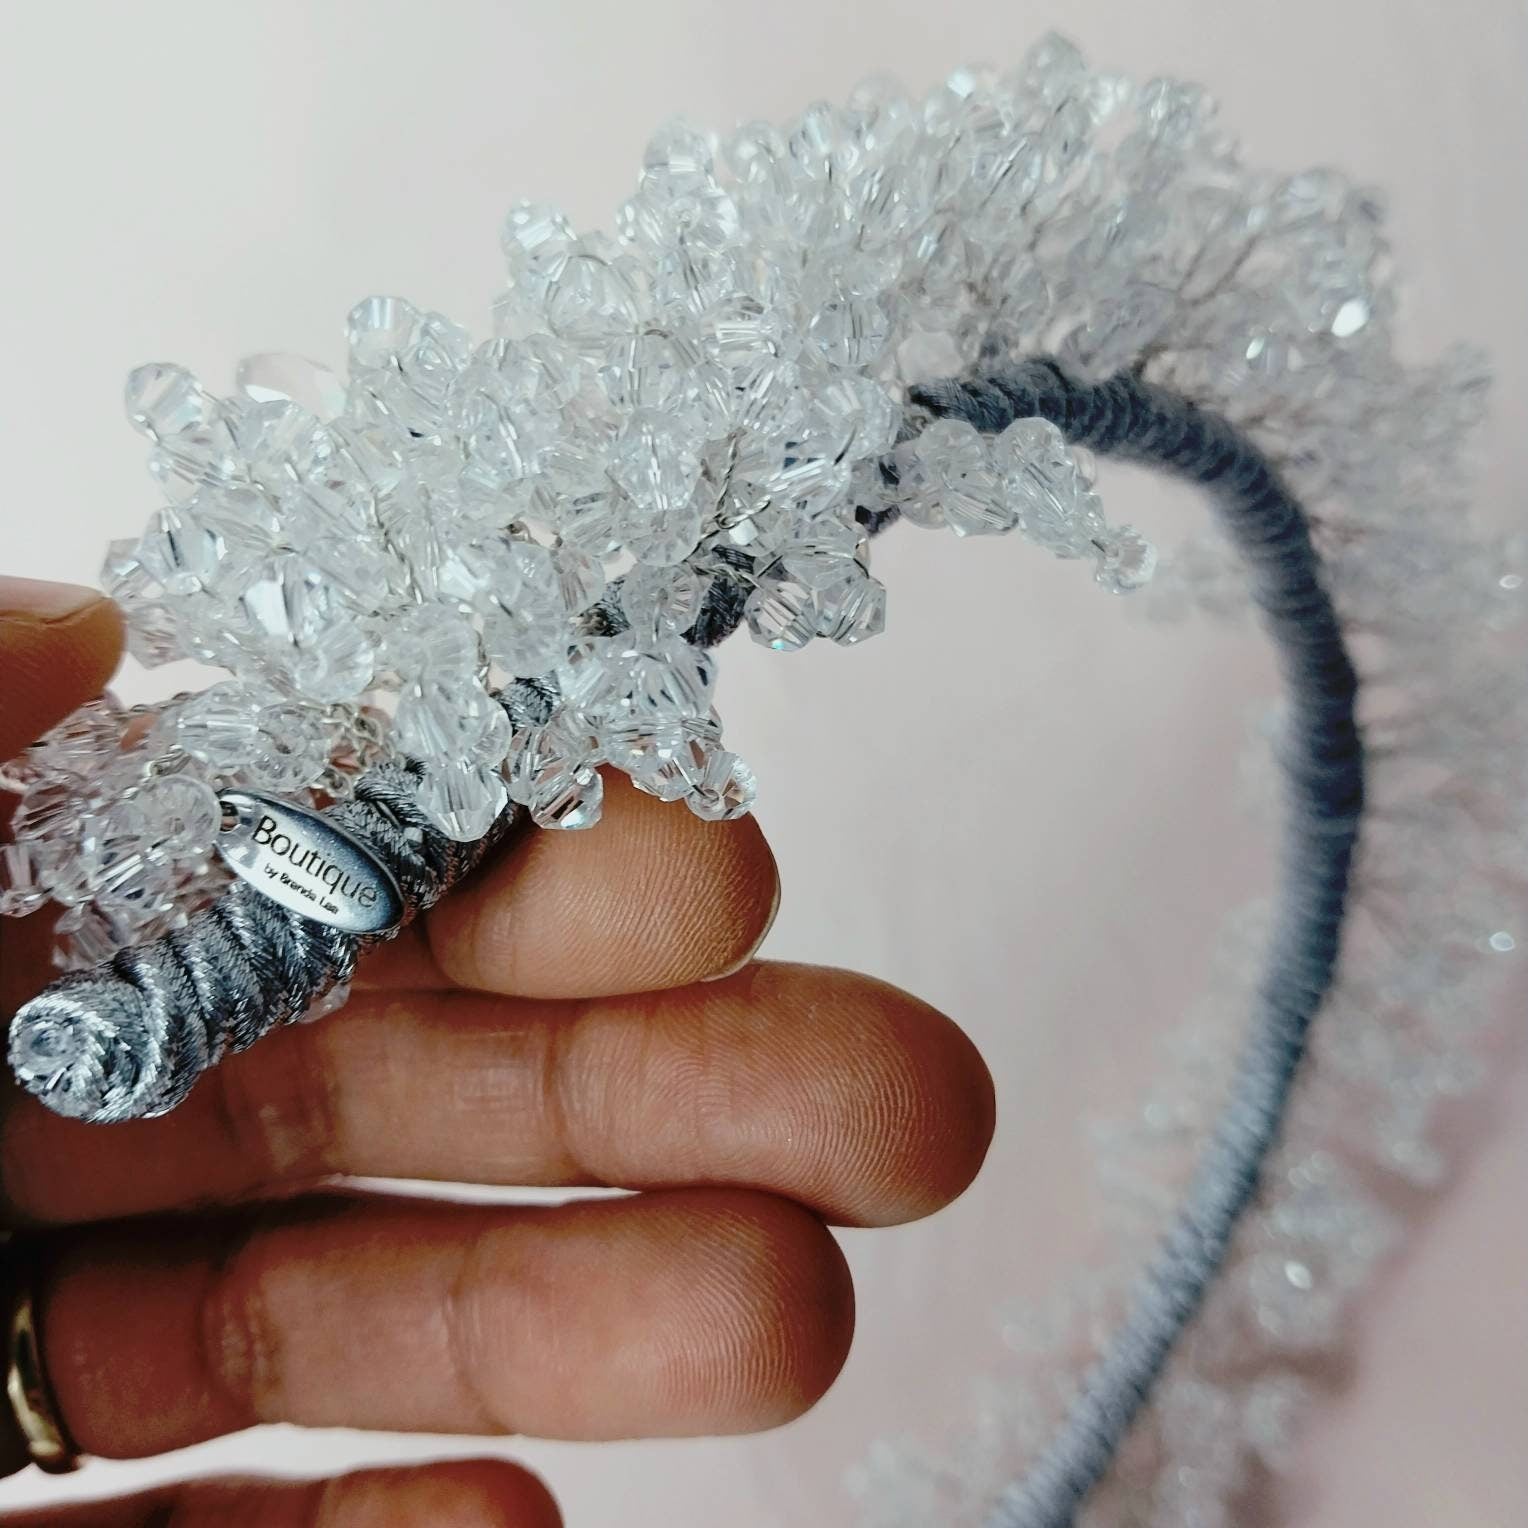 NEIGER headband frozen snowfla bridal headpiece flowers hair accessories silver white bling tiaras crown Australia headpieces snow millinery